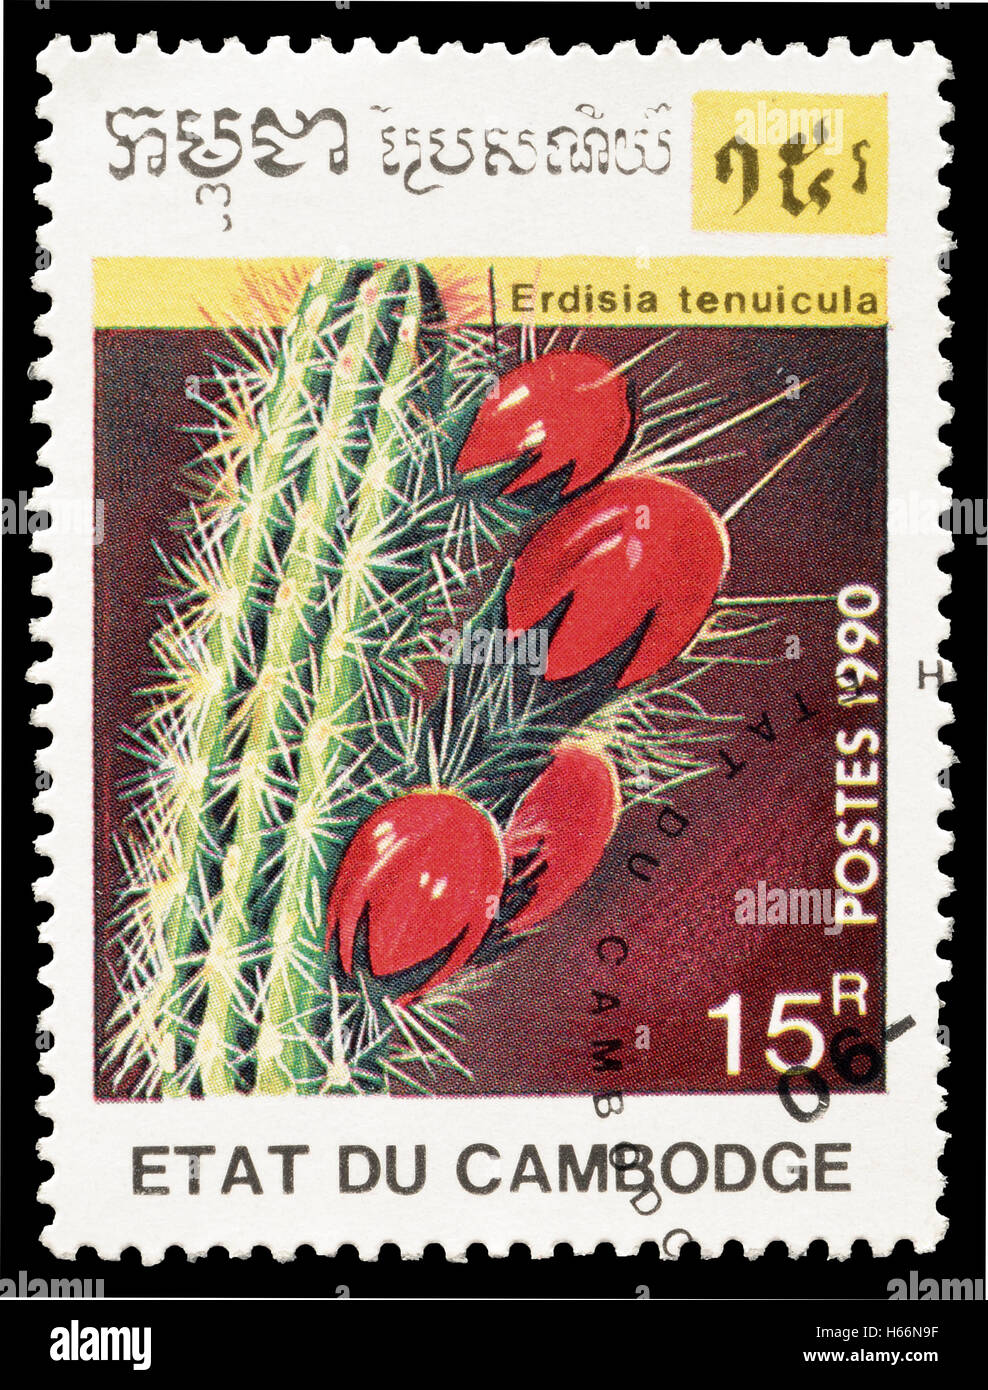 Cambodia stamp 1990 Stock Photo